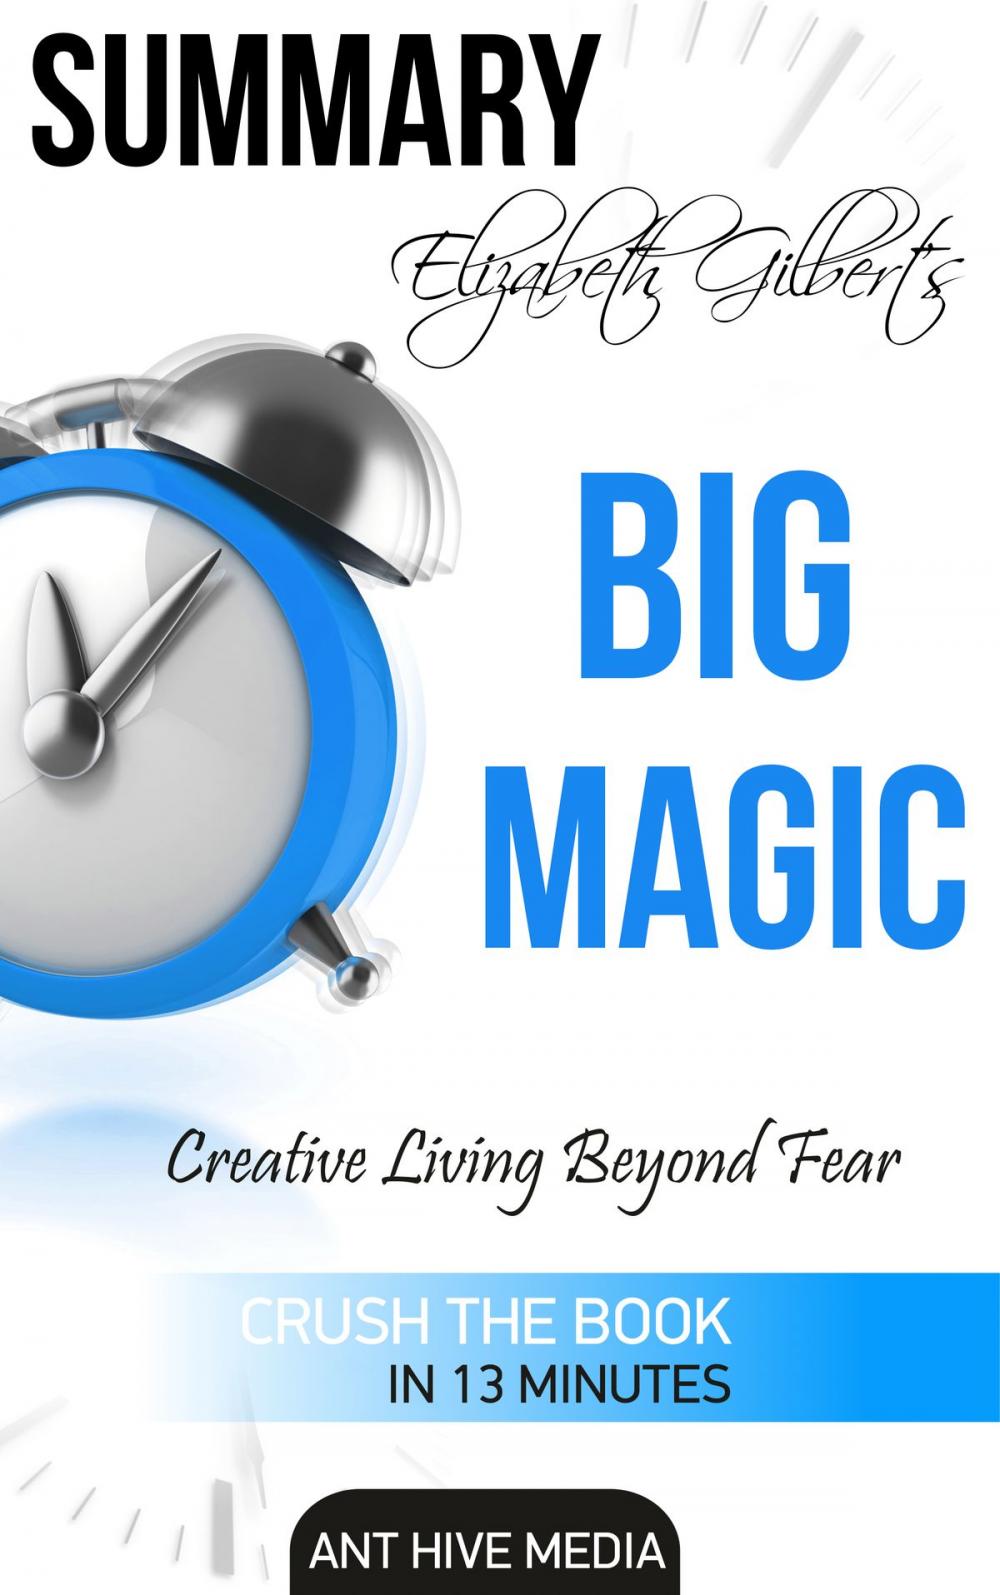 Big bigCover of Elizabeth Gilbert’s Big Magic: Creative Living Beyond Fear | Summary